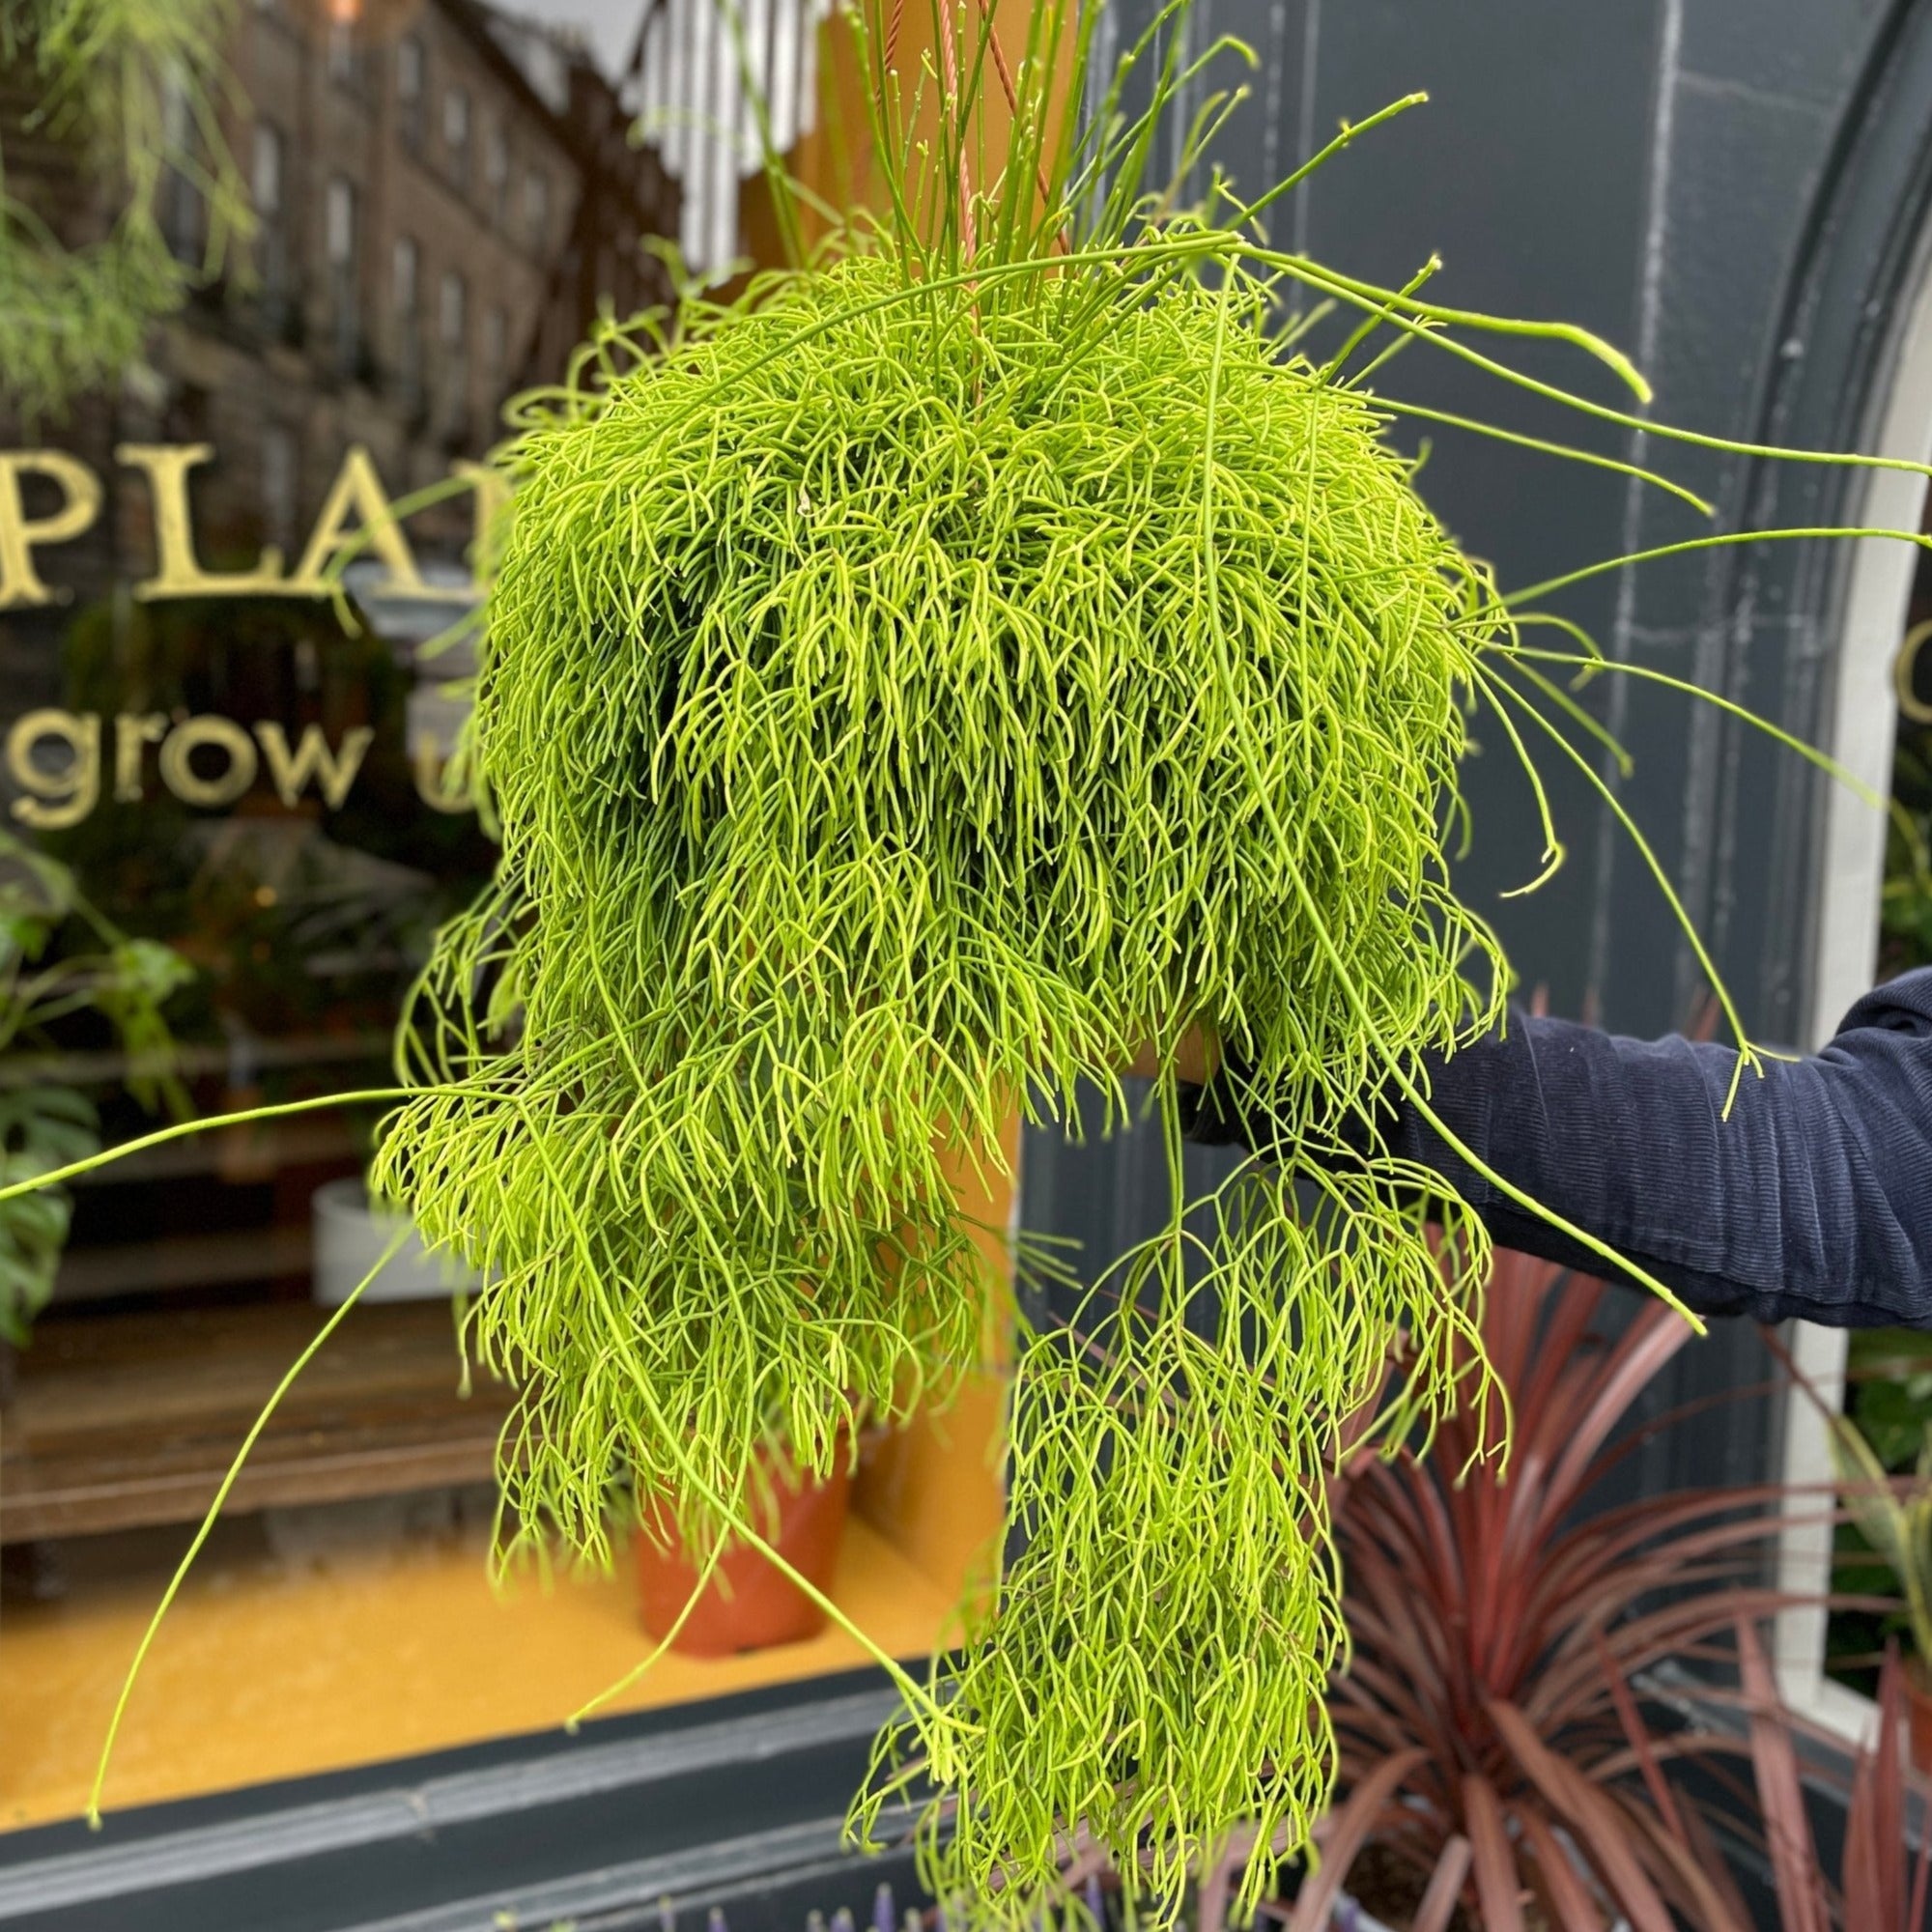 Rhipsalis cassutha (21cm hangpot) - grow urban. UK